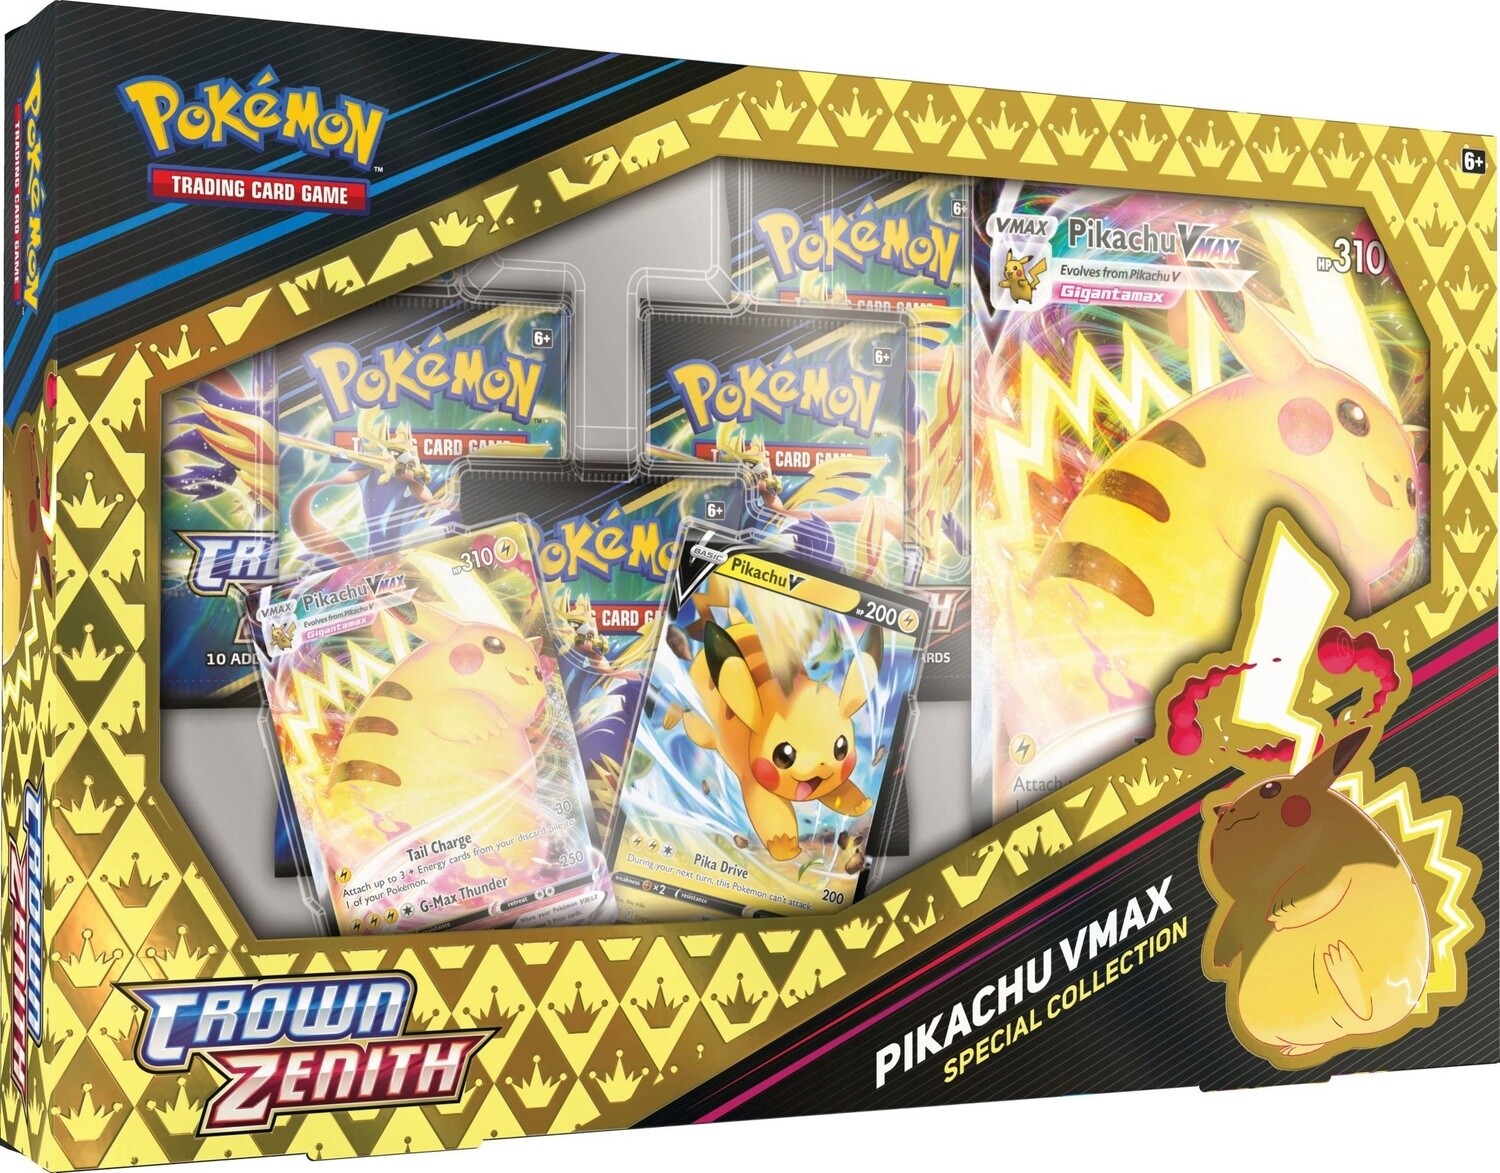 Pokémon Crown Zenith Special Collection Pikachu VMAX